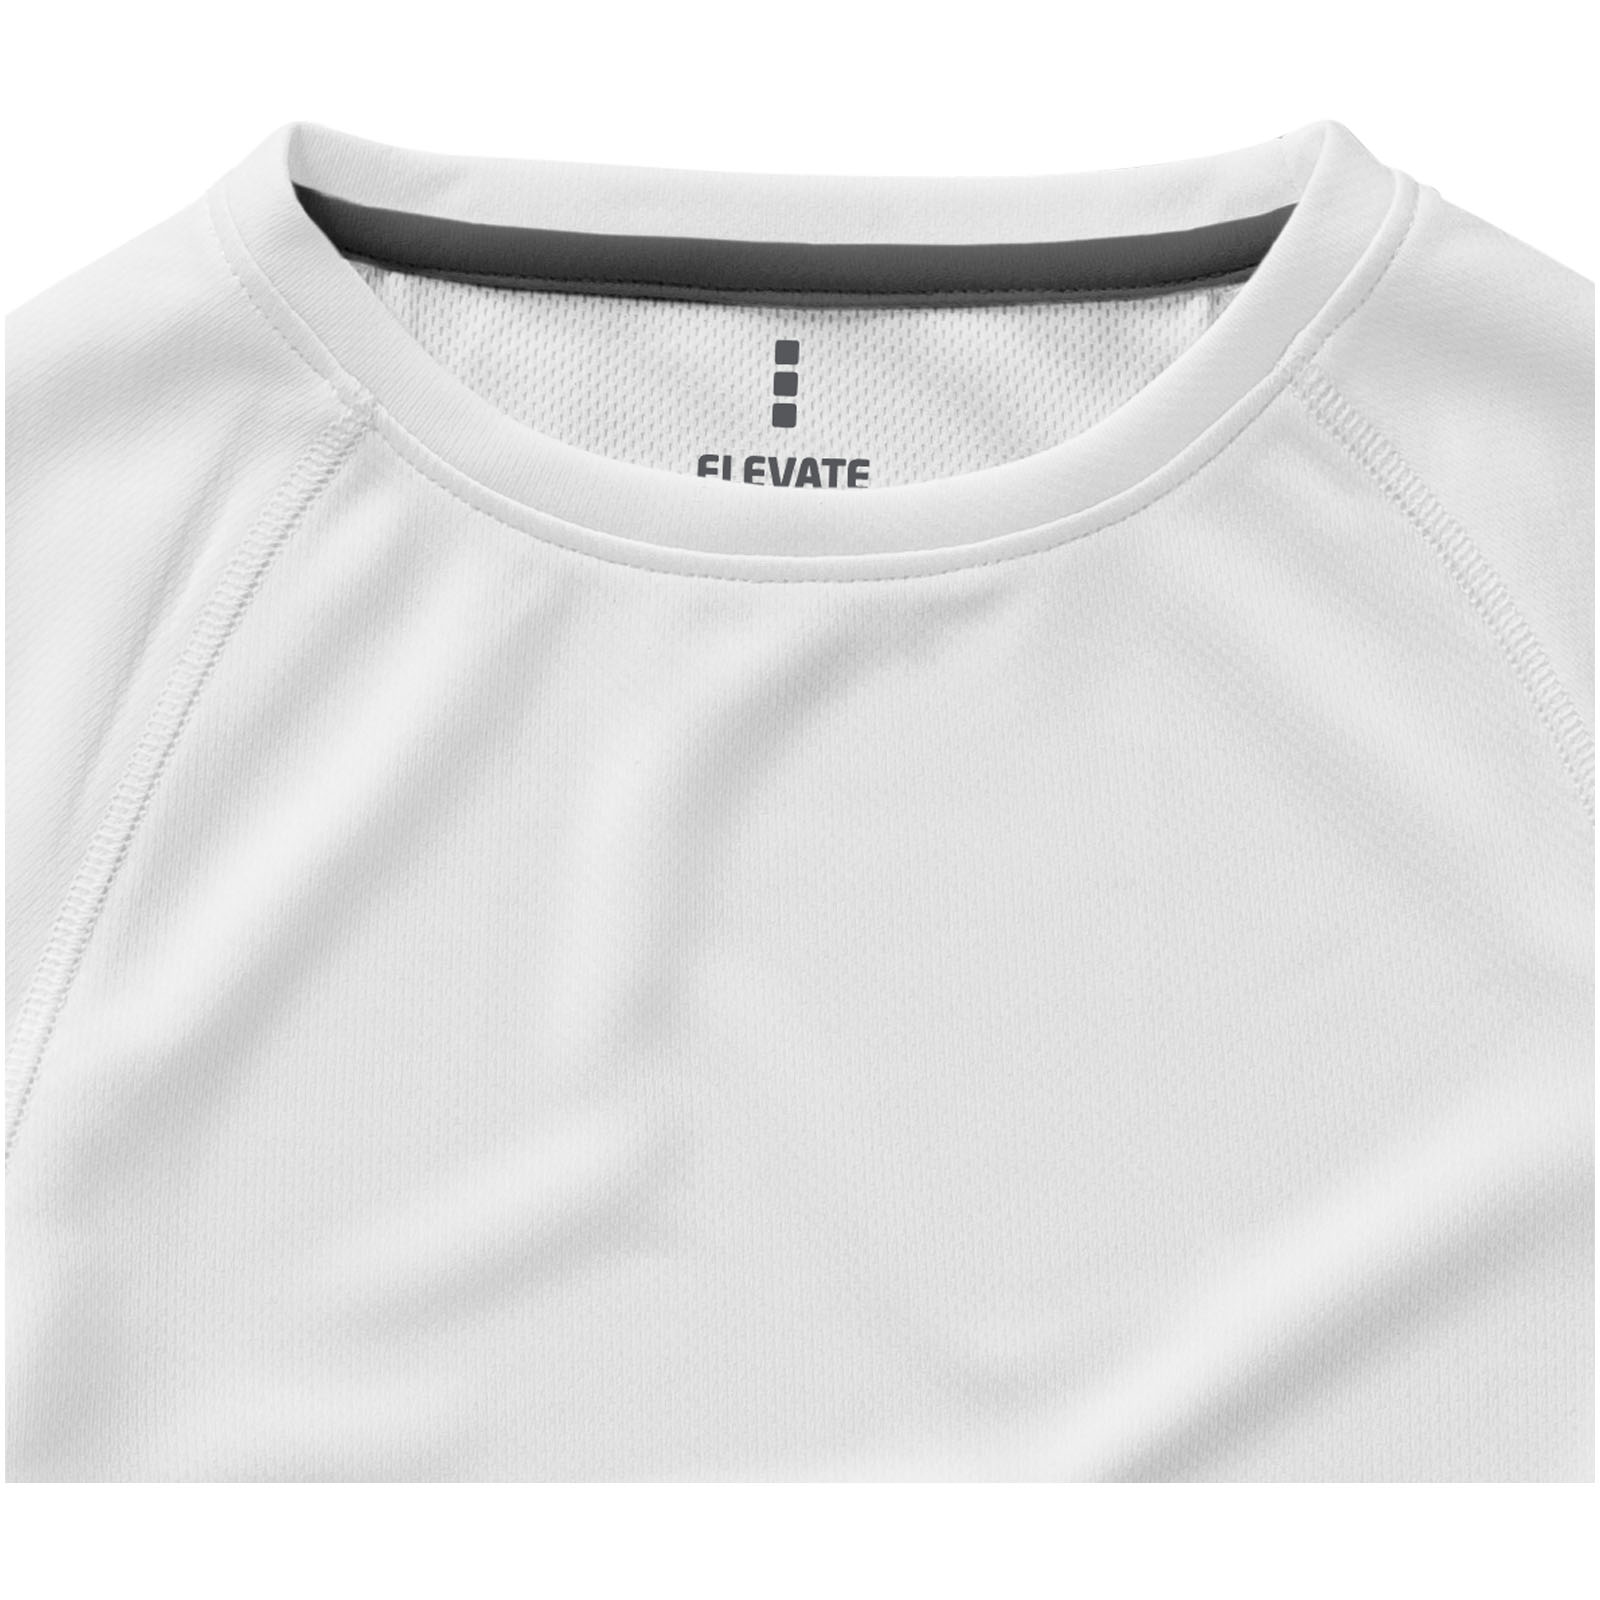 Advertising T-shirts - Niagara short sleeve women's cool fit t-shirt - 4